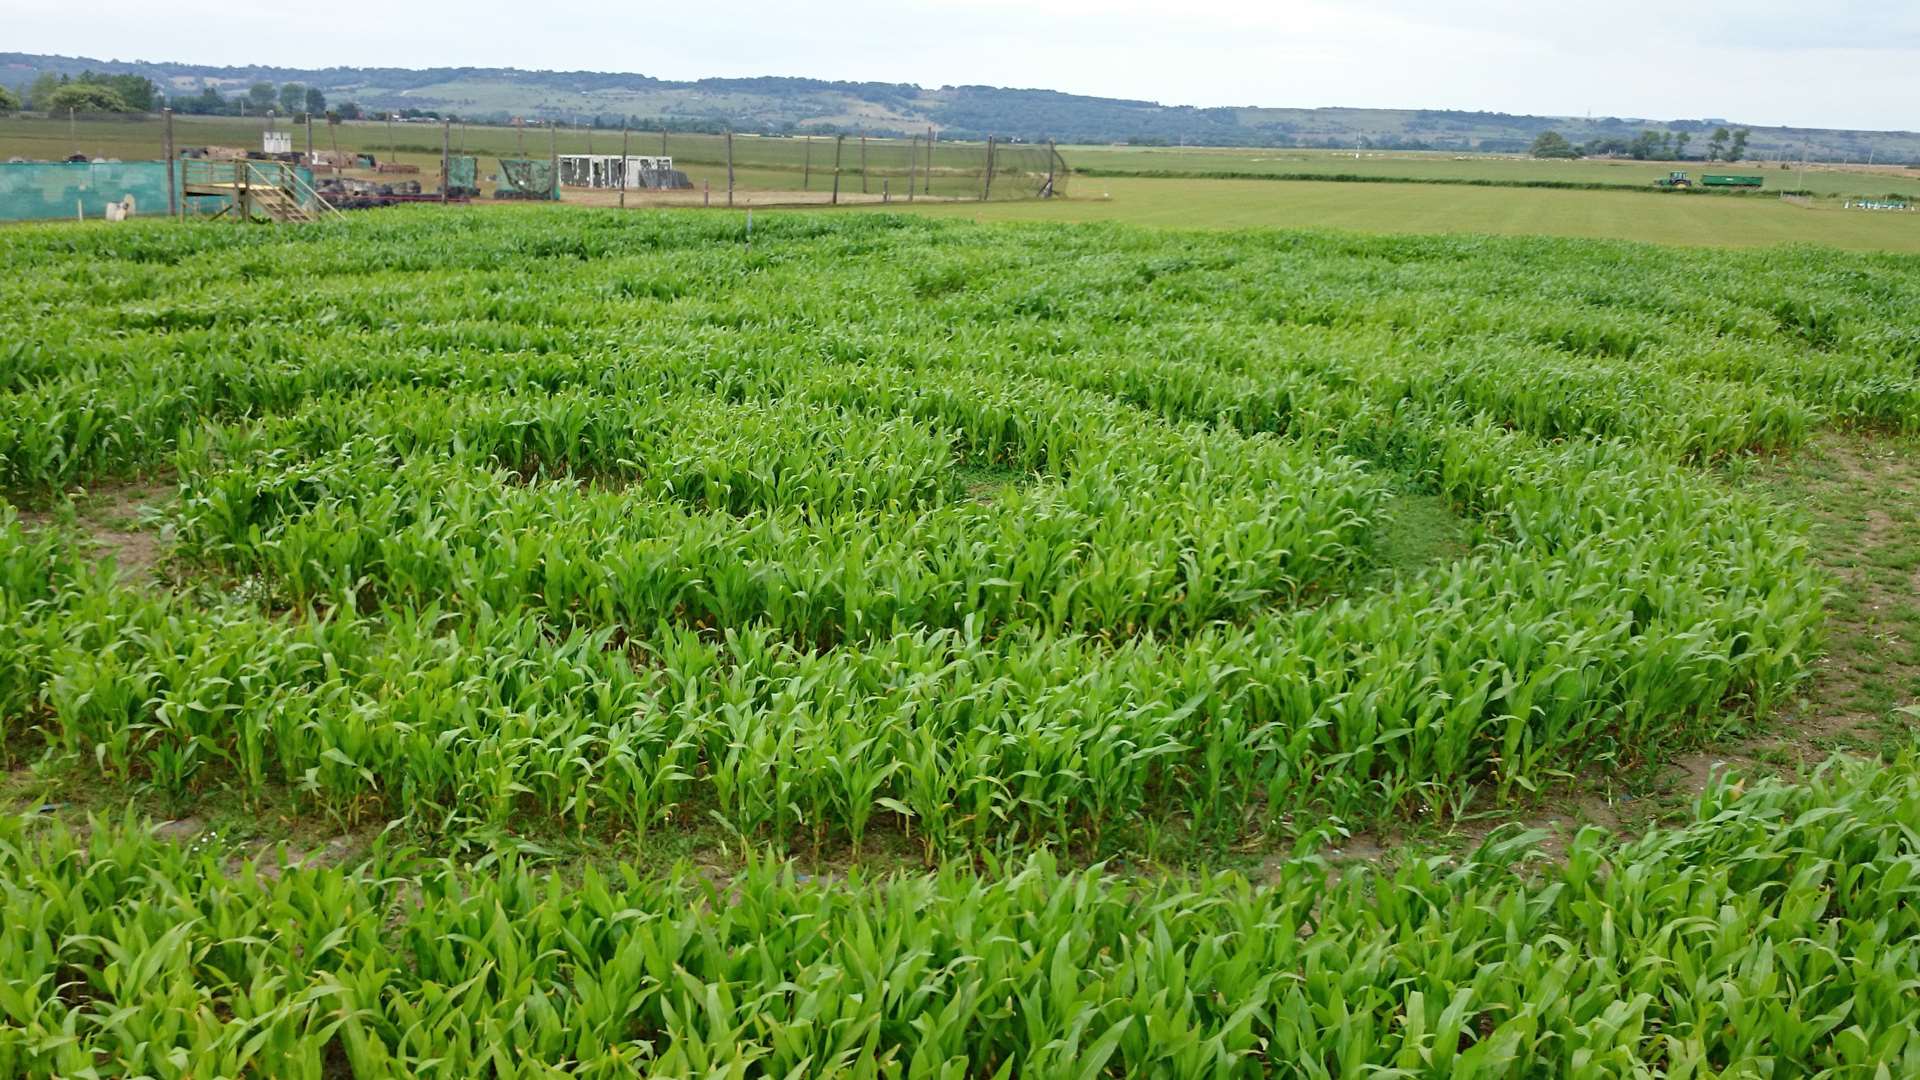 The Maize Maze at Haguelands Village, near Dymchurch, takes shape